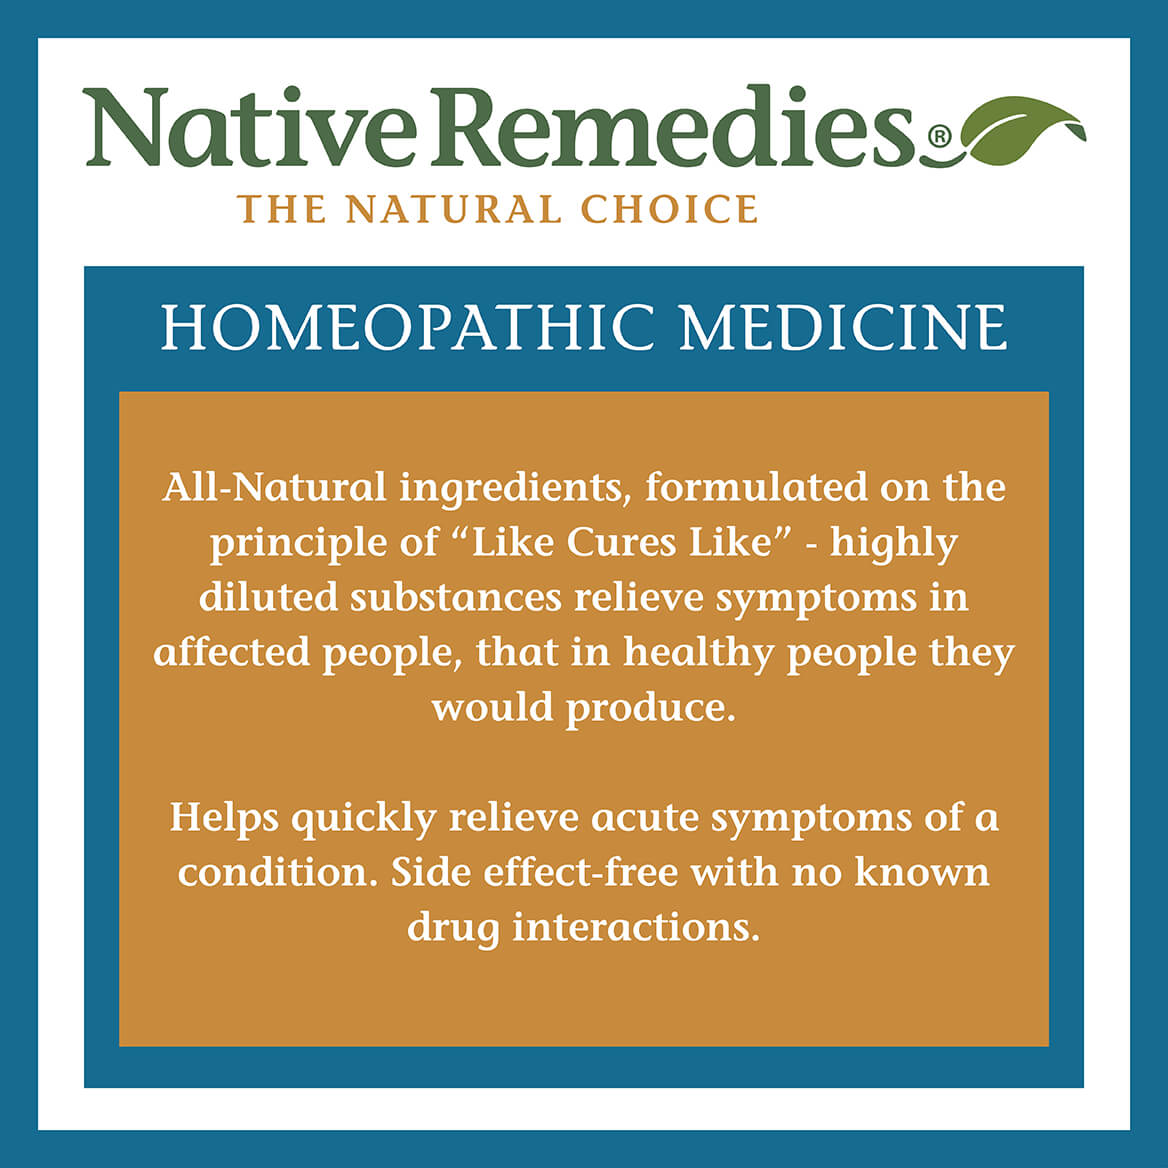 TremorSoothe - Natural Homeopathic Formula - 180 Tablets